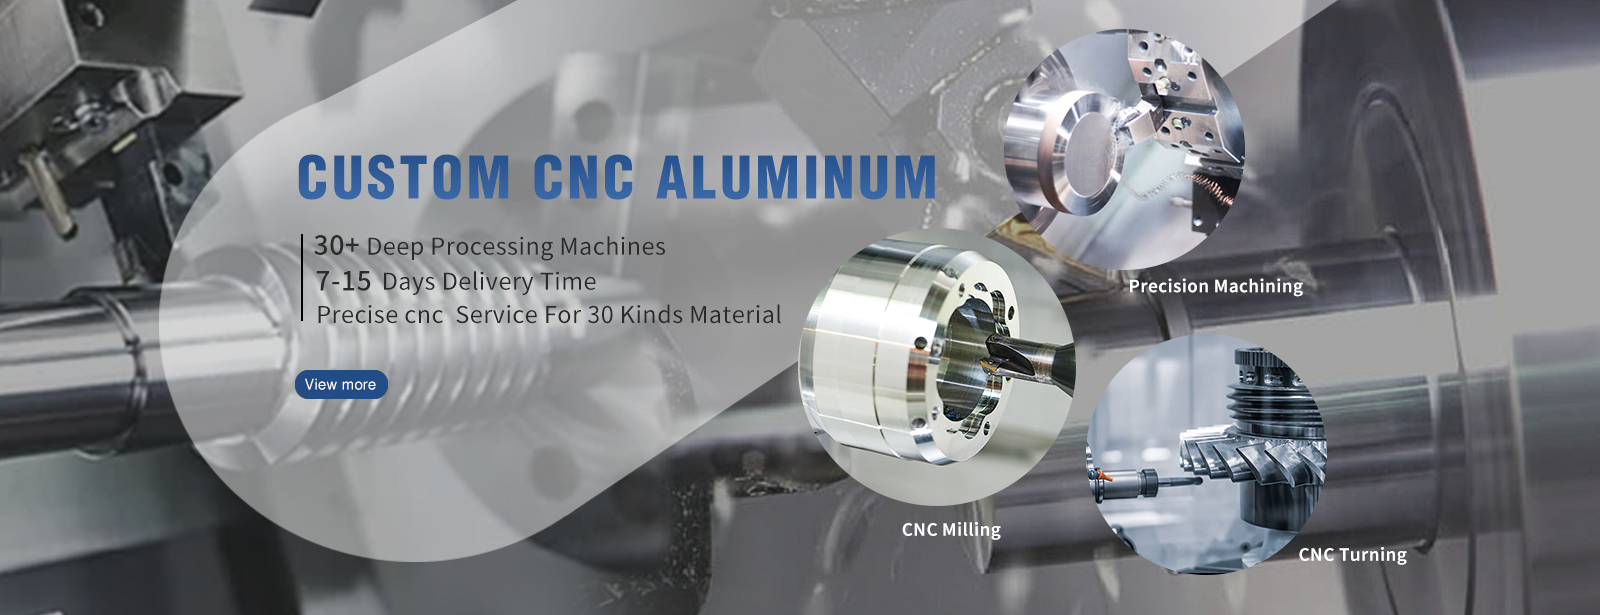 Custom CNC aluminum